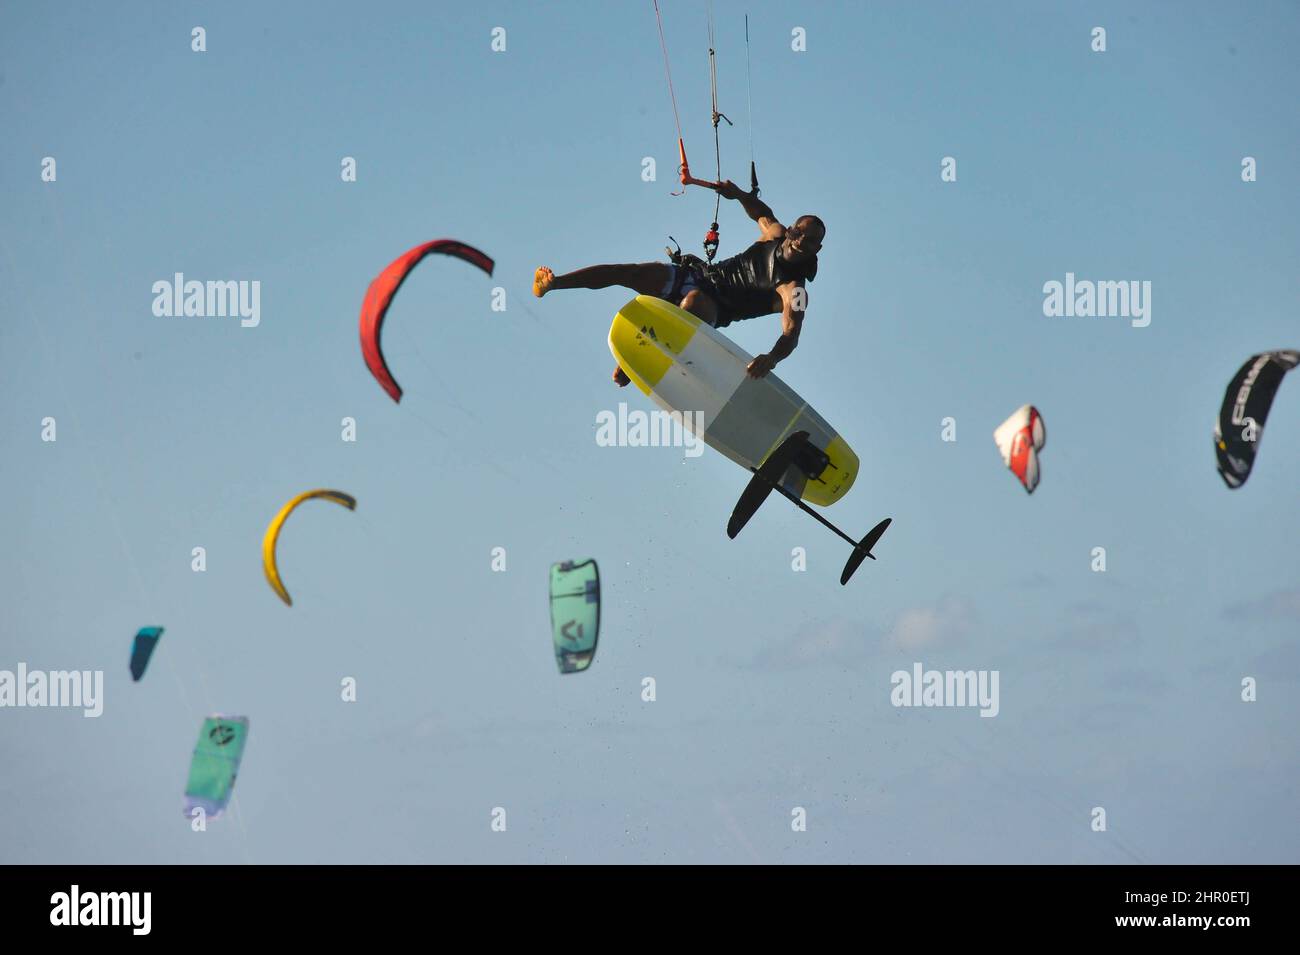 Cabarete, Dominican Republic. Lifestyle based on kitesurfing. Stock Photo